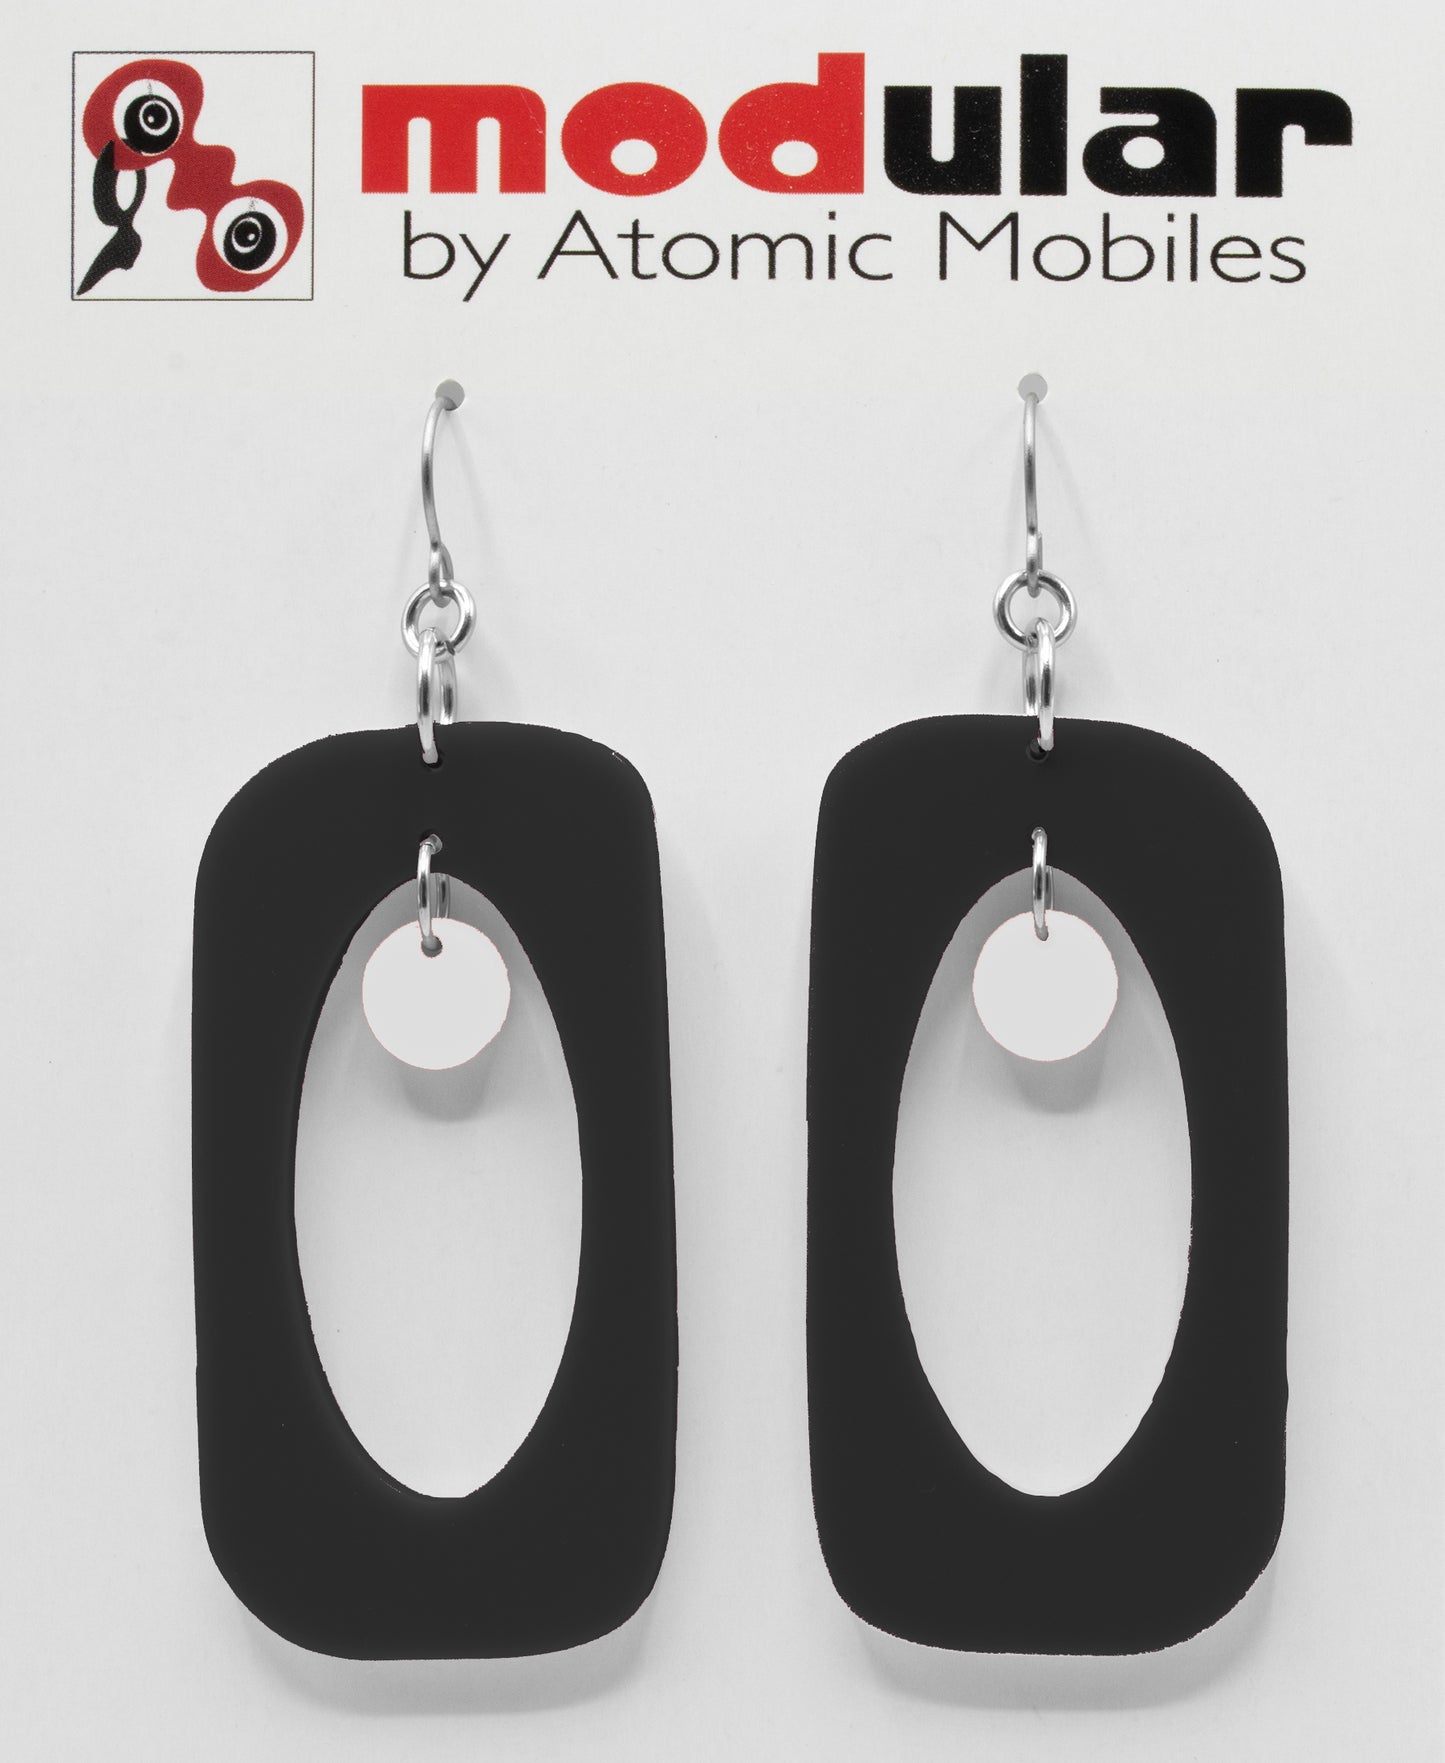 MODular Earrings - Beatnik Boho Statement Earrings in Black and White by AtomicMobiles.com - retro era inspired mod handmade jewelry